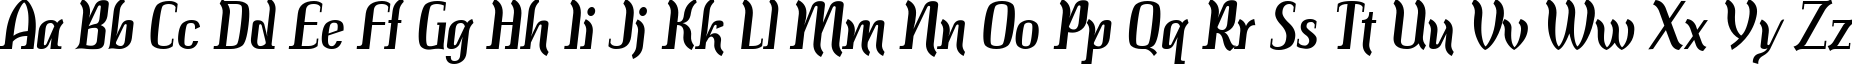 Пример написания английского алфавита шрифтом Colourbars